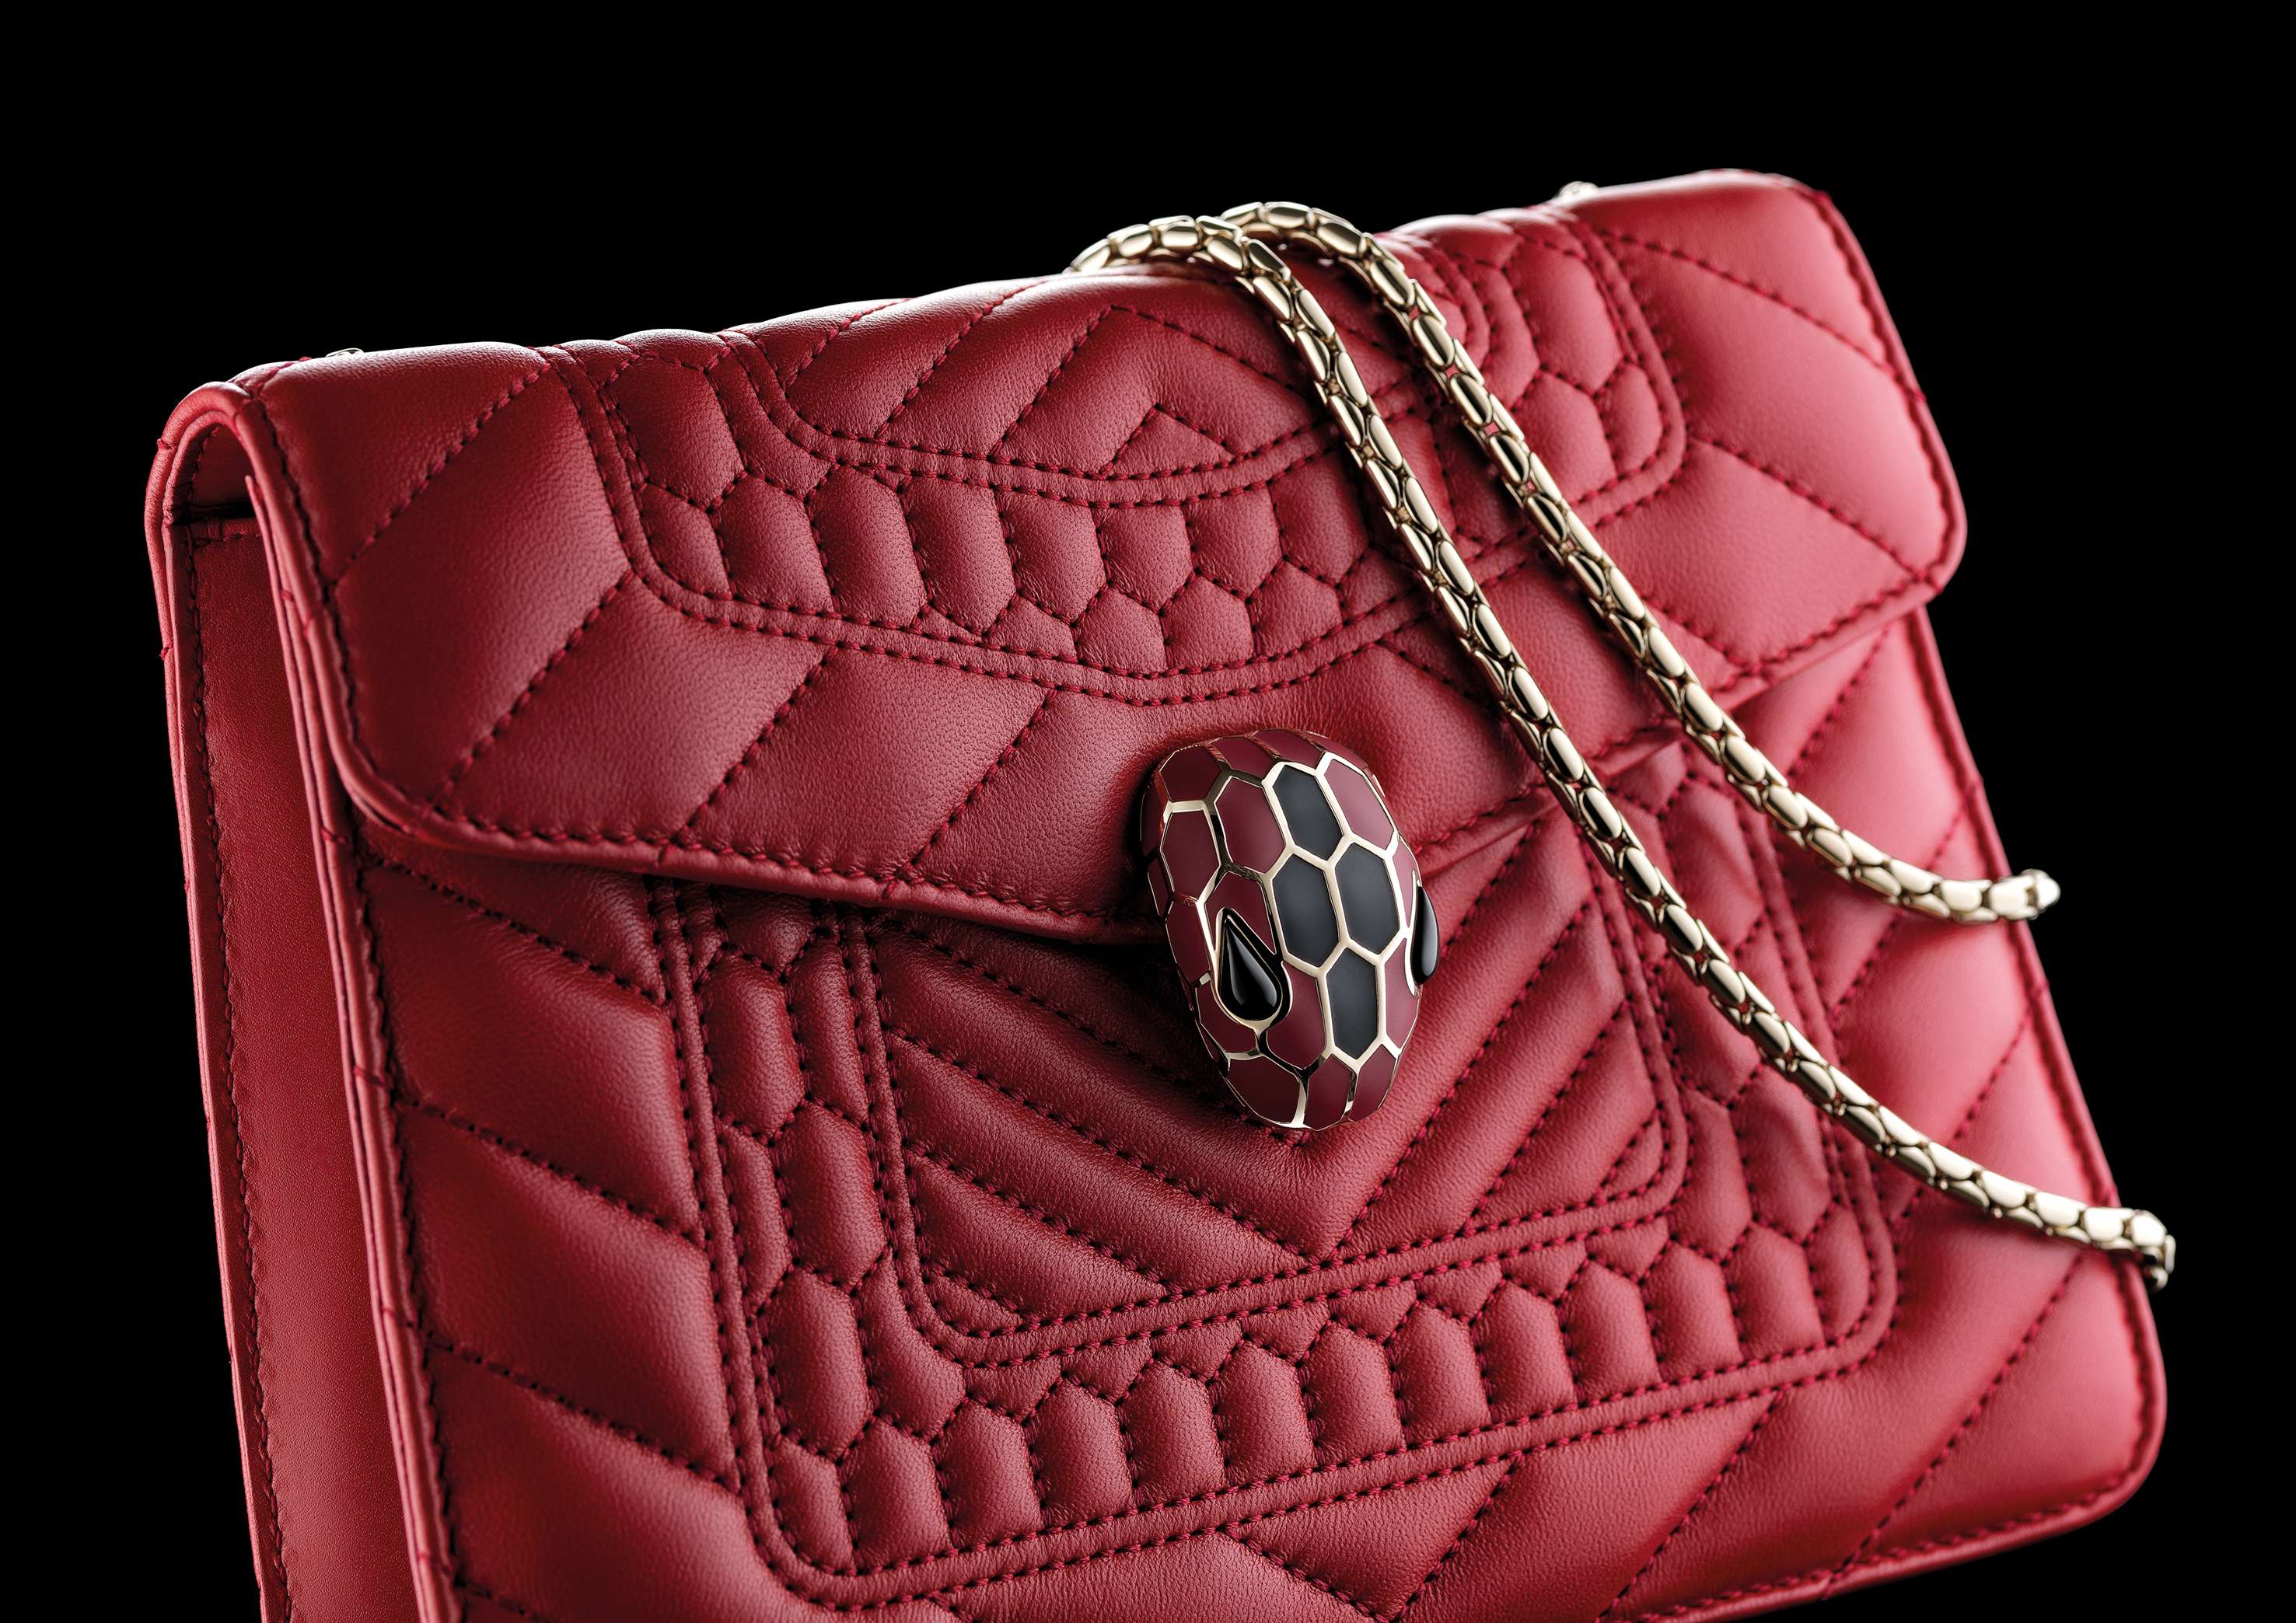 Bulgari Serpenti handbags – Winter Exclusive Collection